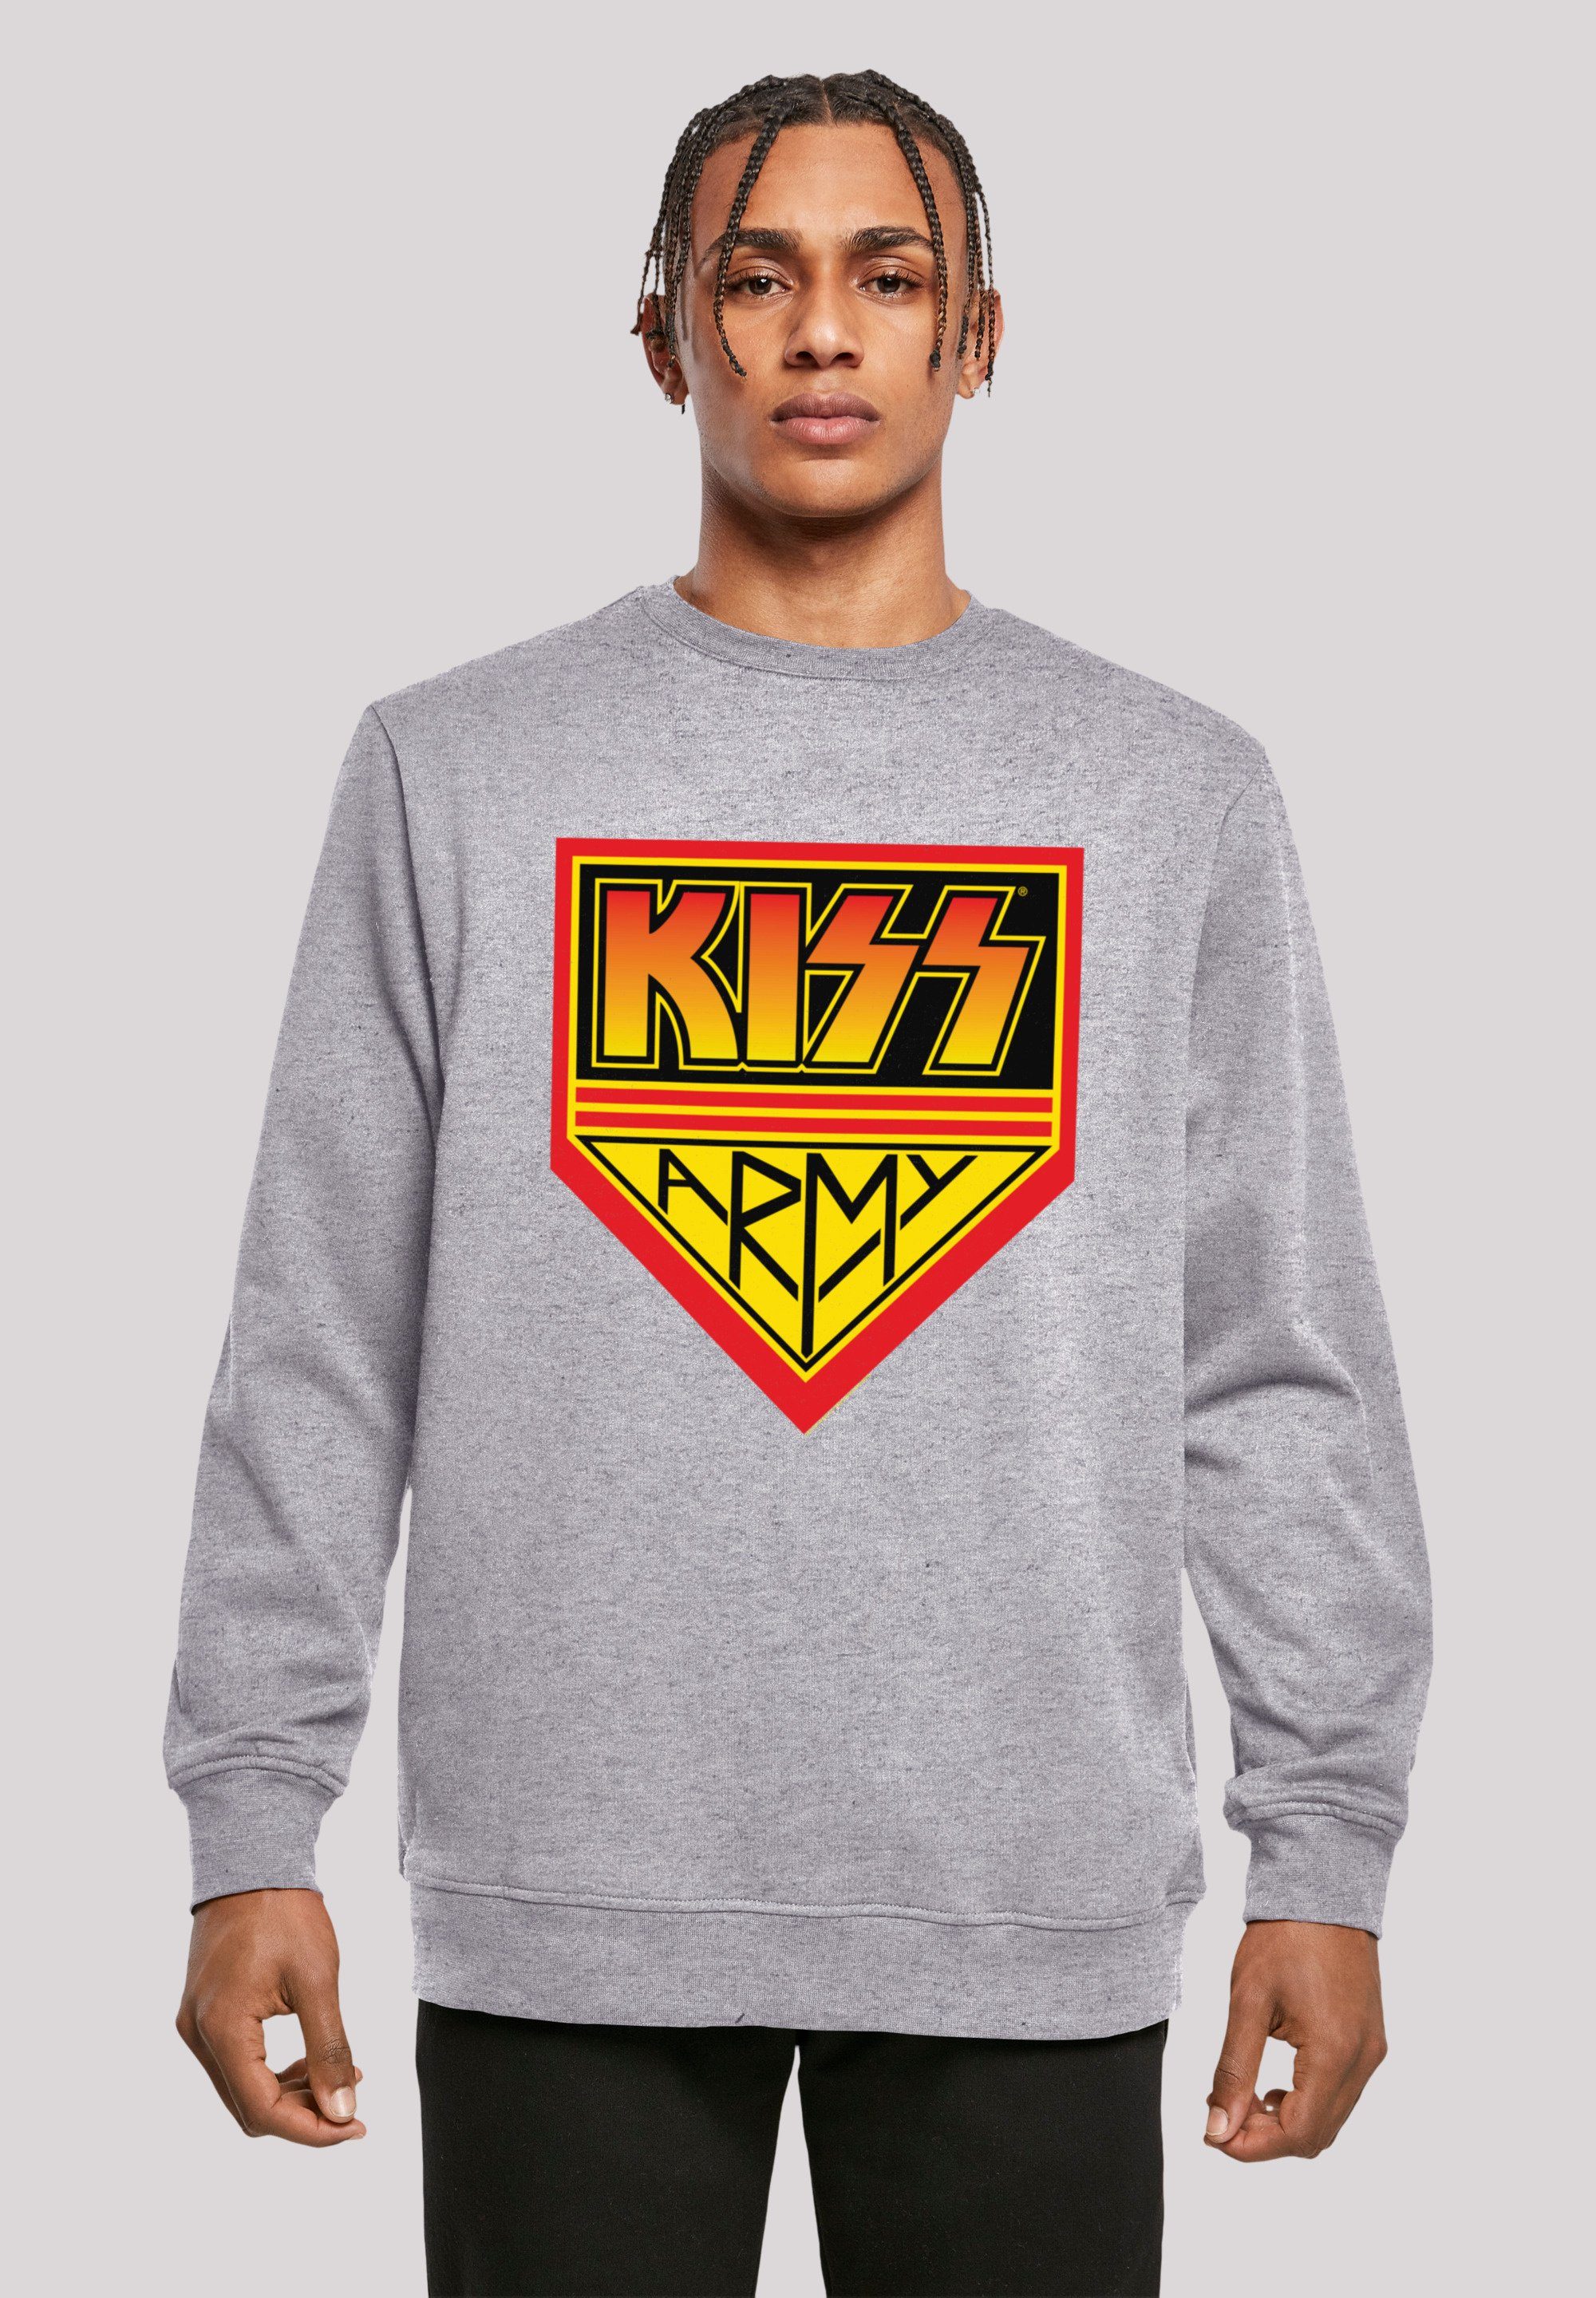 F4NT4STIC Sweatshirt Kiss Rock Band Army Logo Premium Qualität, Musik, By Rock Off heather grey